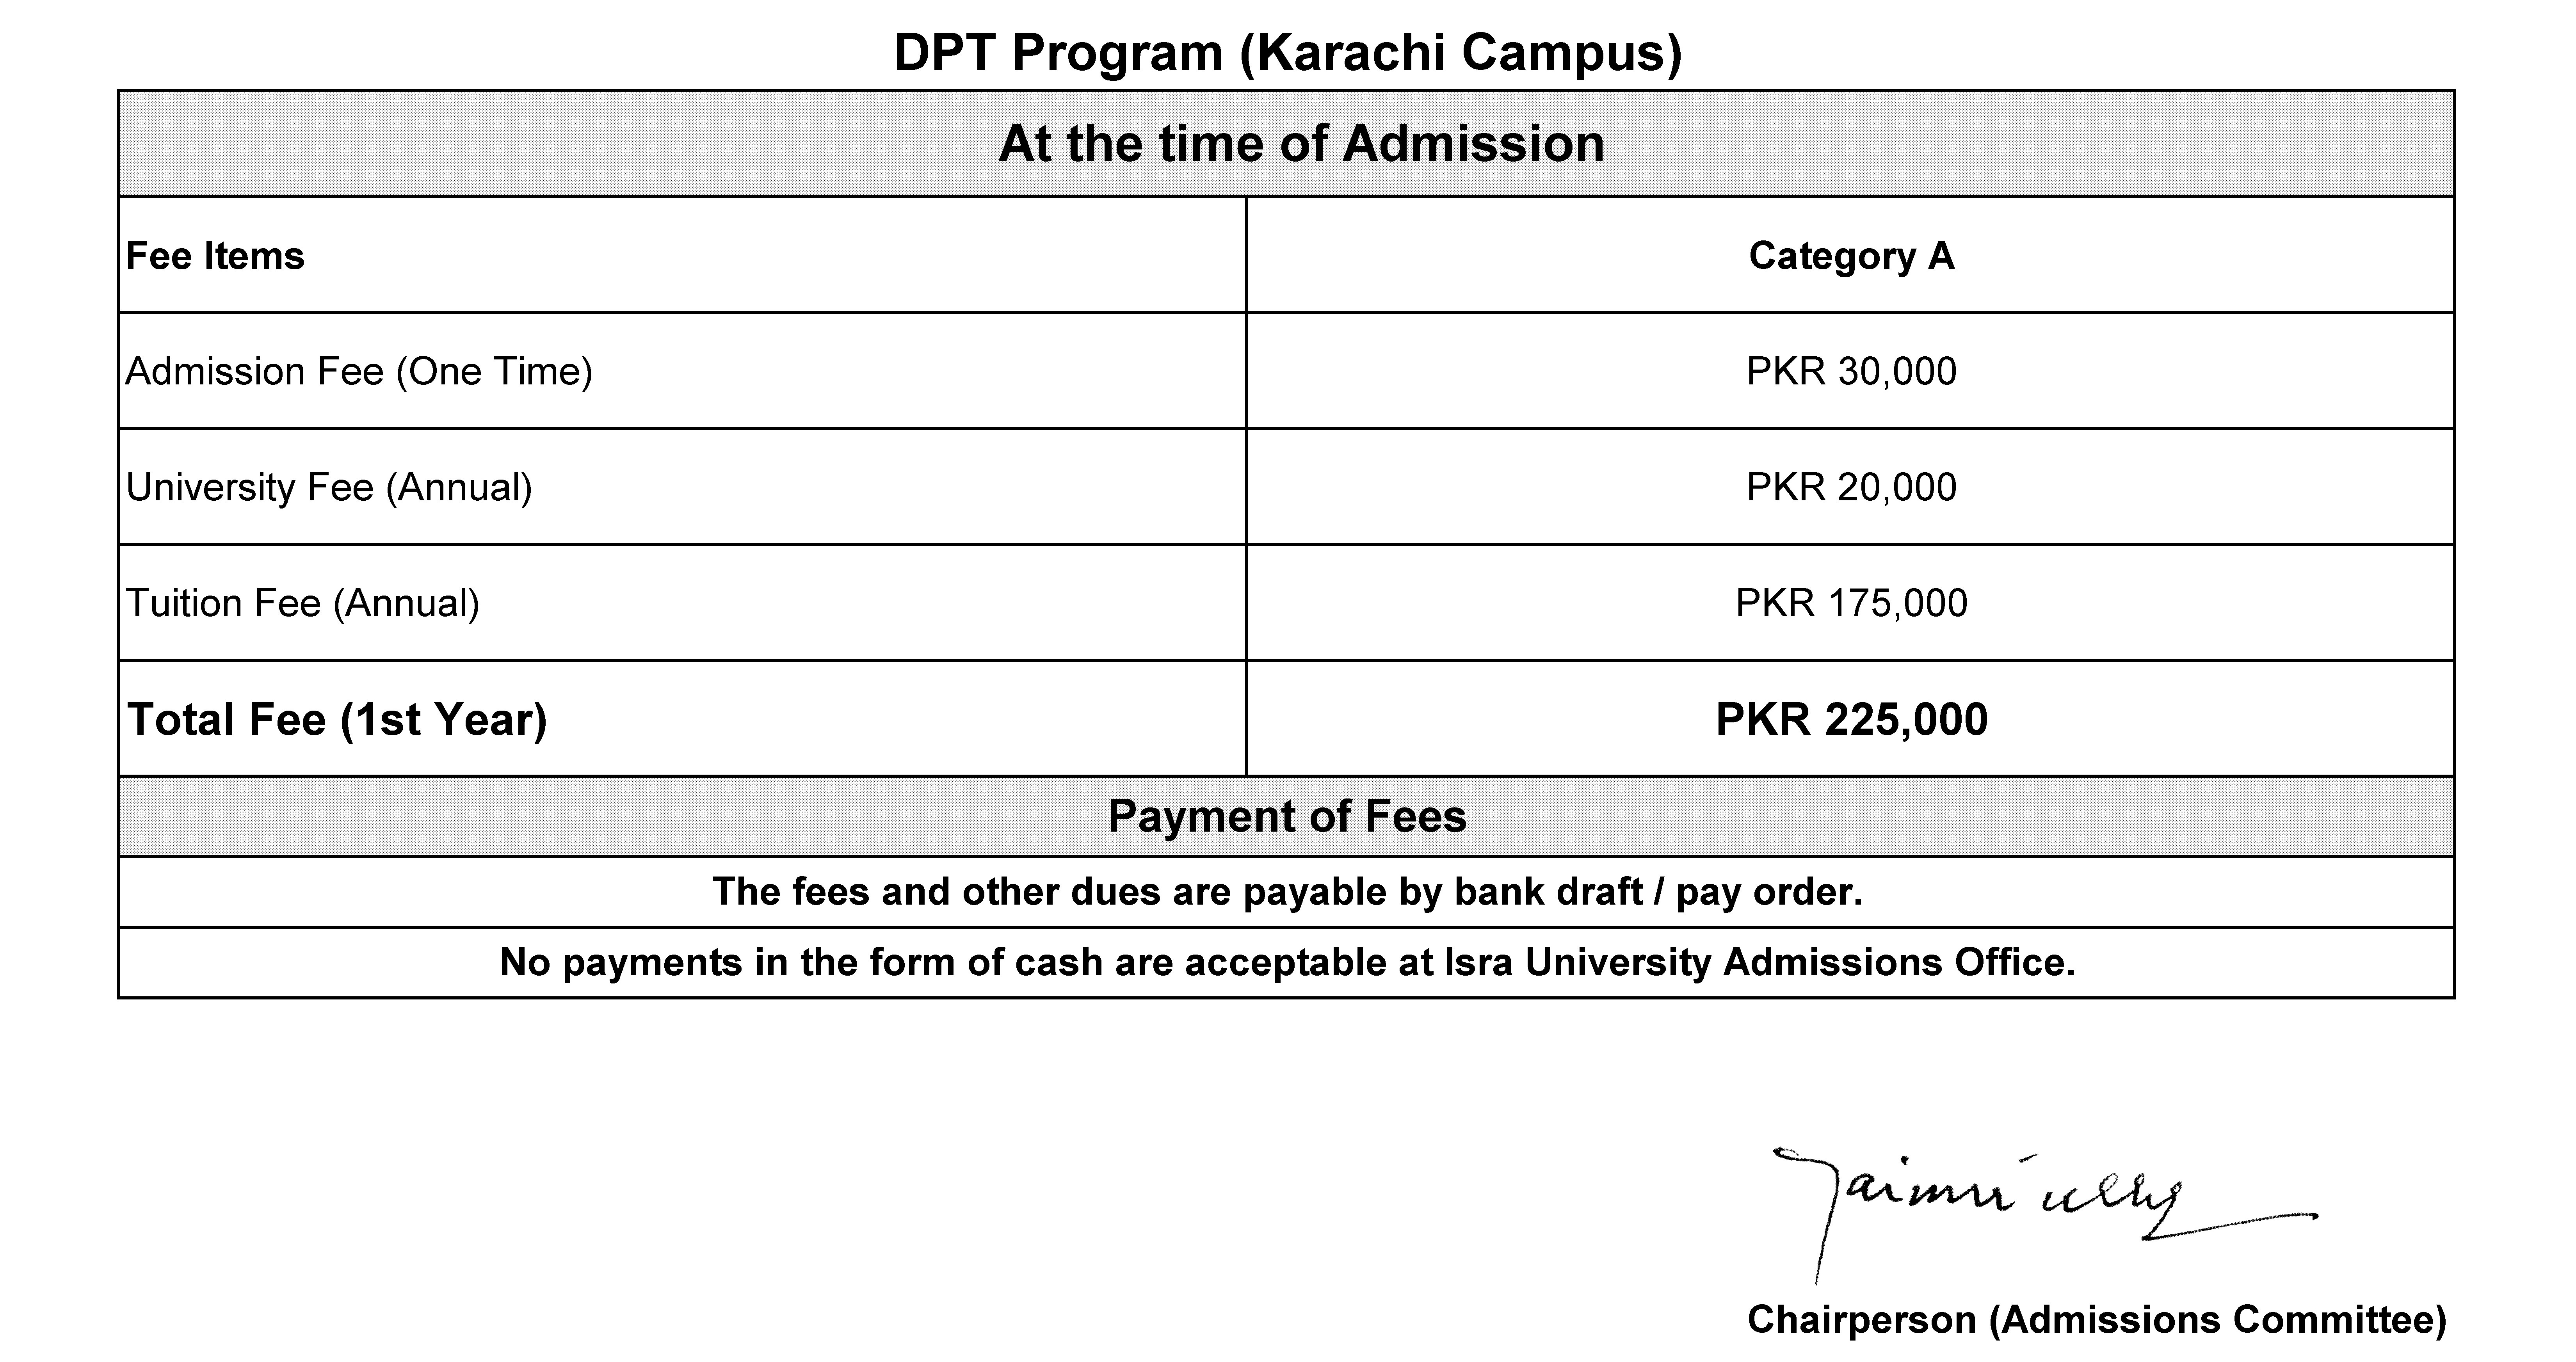 fees-structure-dpt-program-karachi-campus